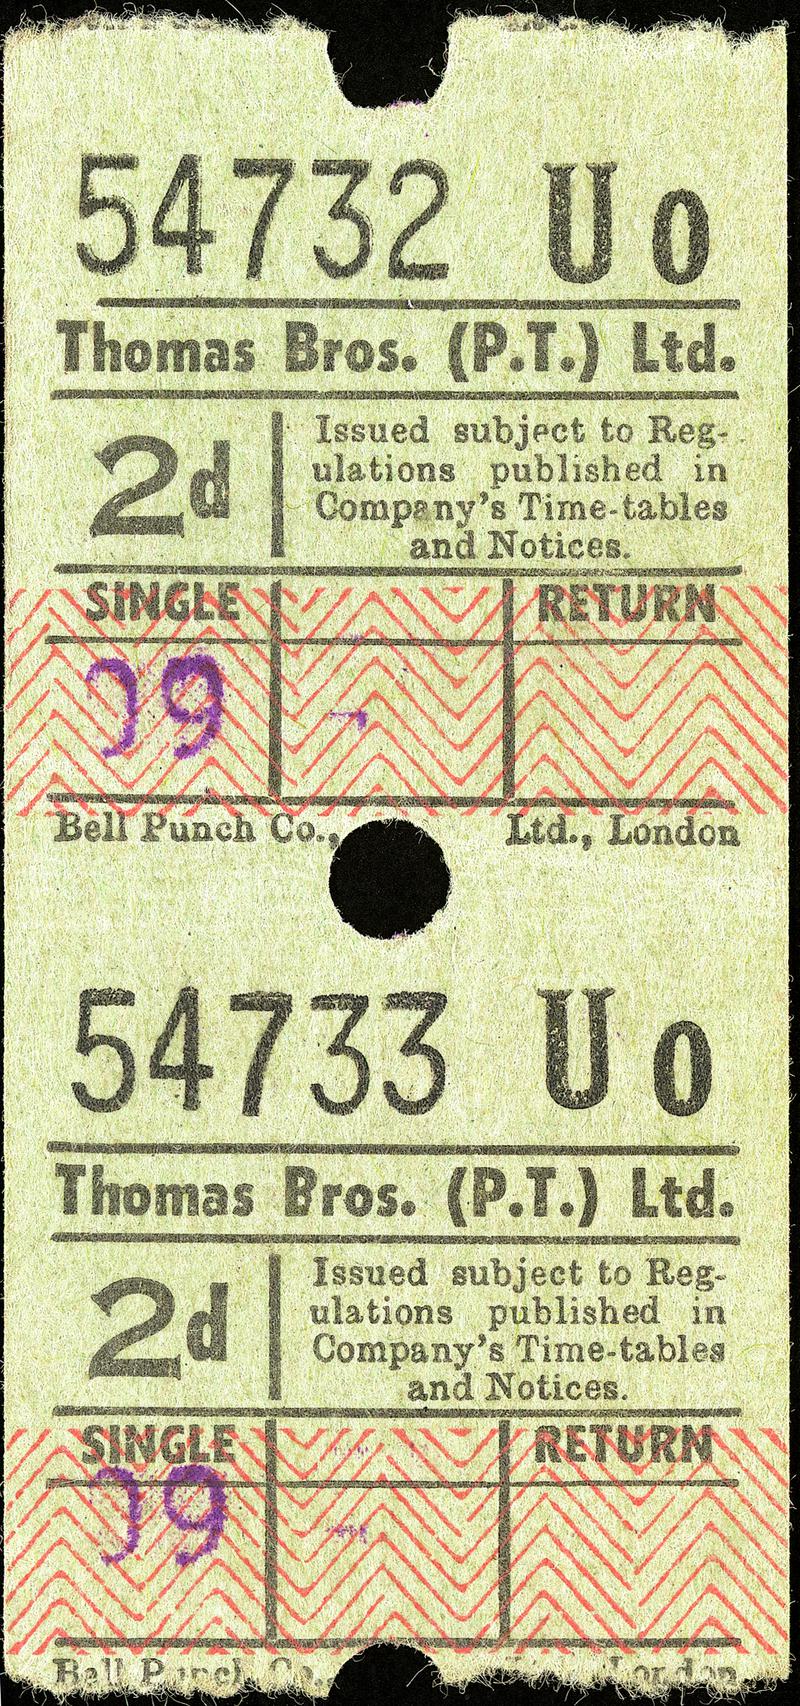 Thomas Bros. (P.T.) Ltd. bus ticket